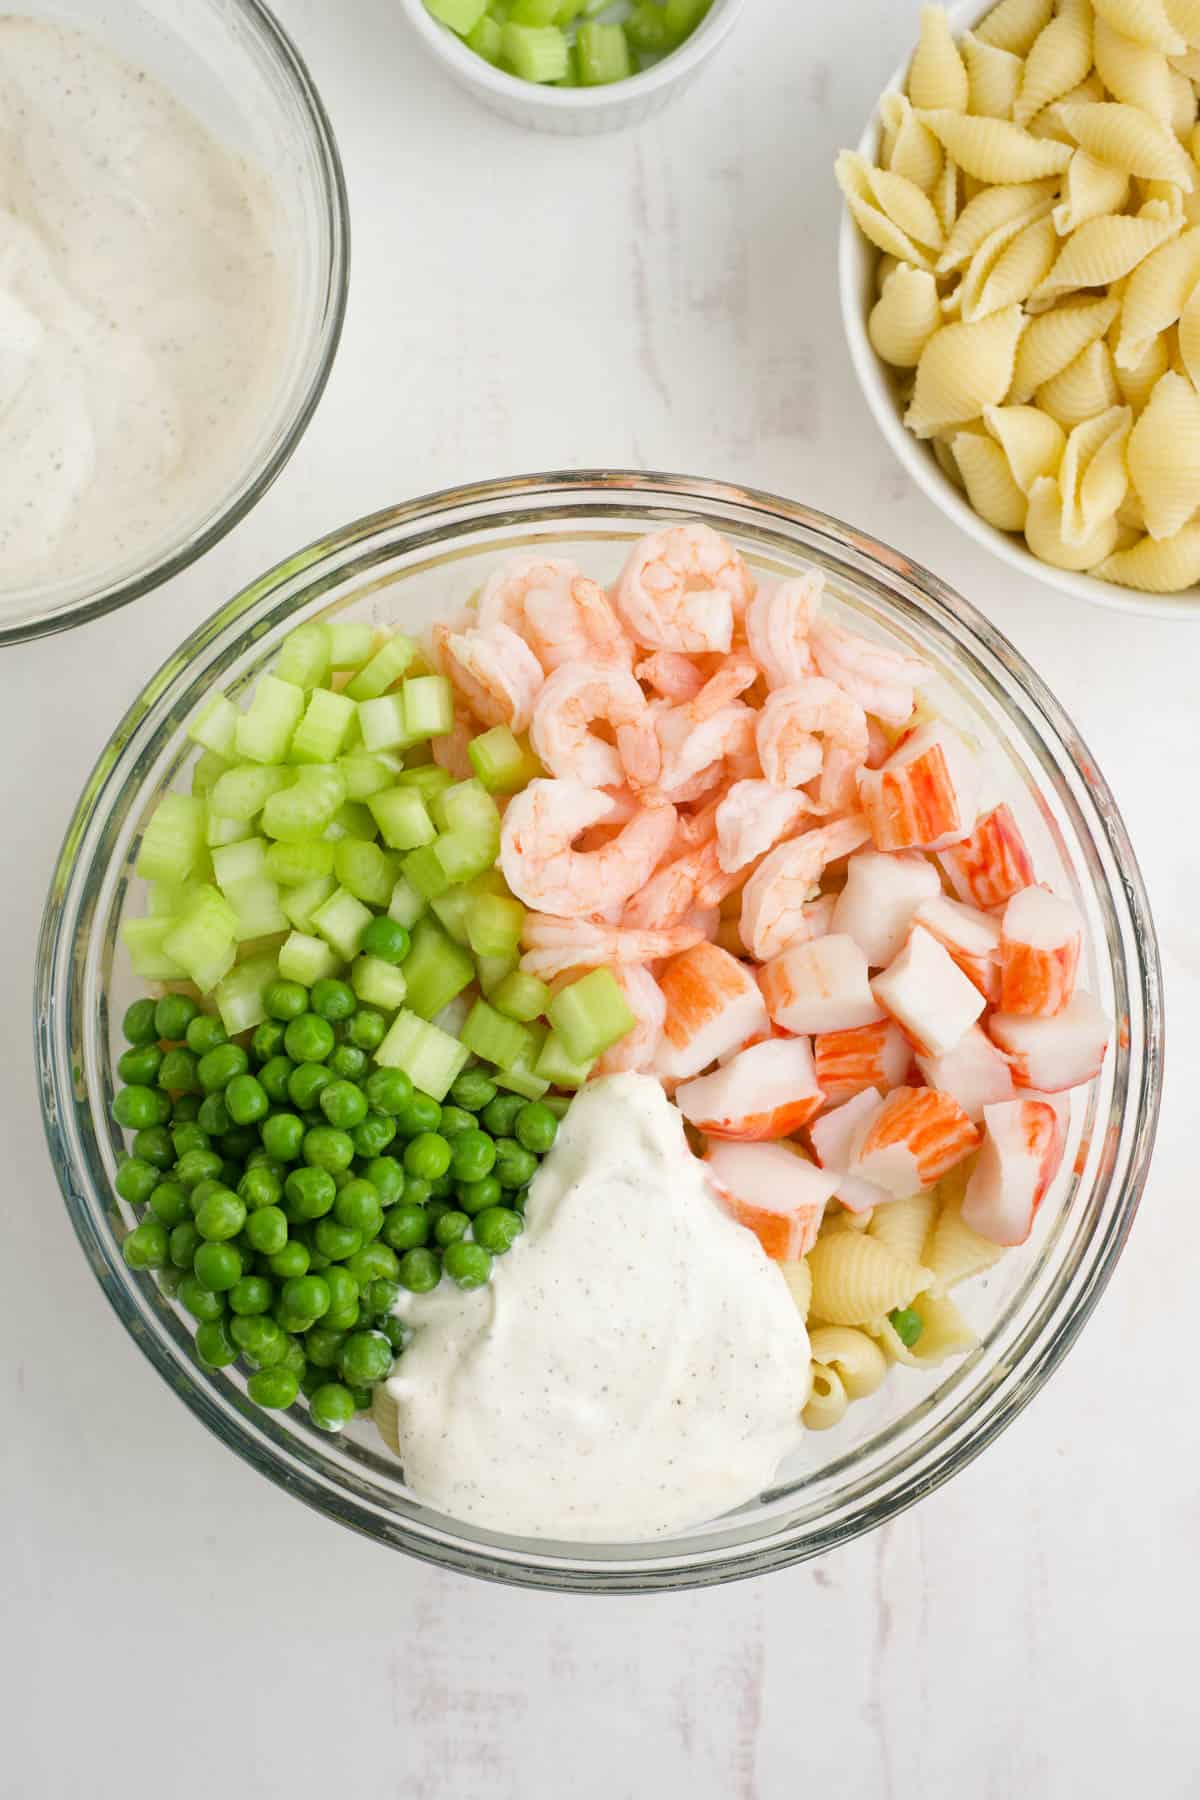 Seafood pasta salad ingredients in a large mixing bowl.